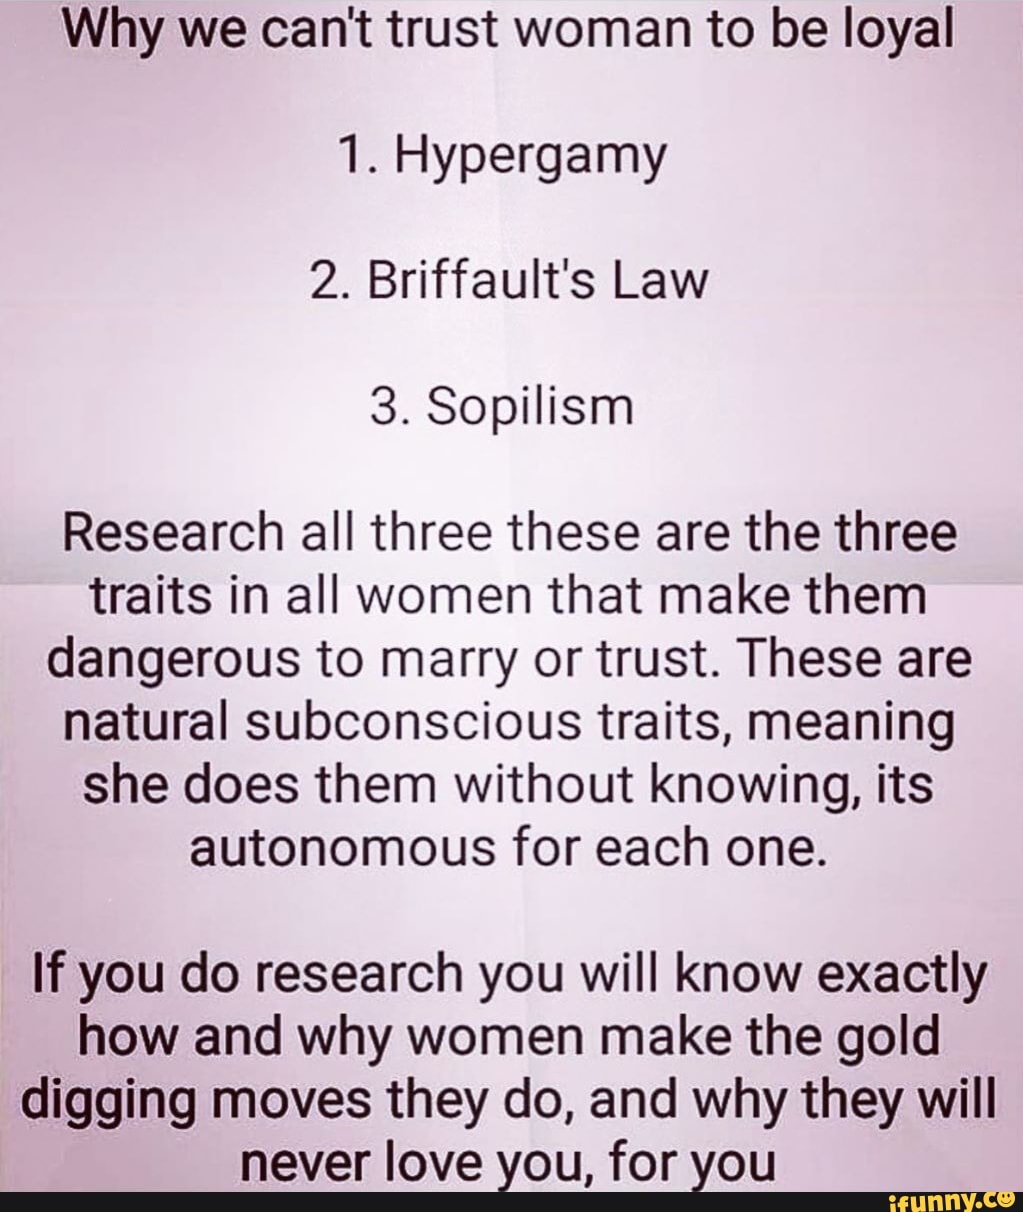 Woman traits of a loyal Aquarius Woman: